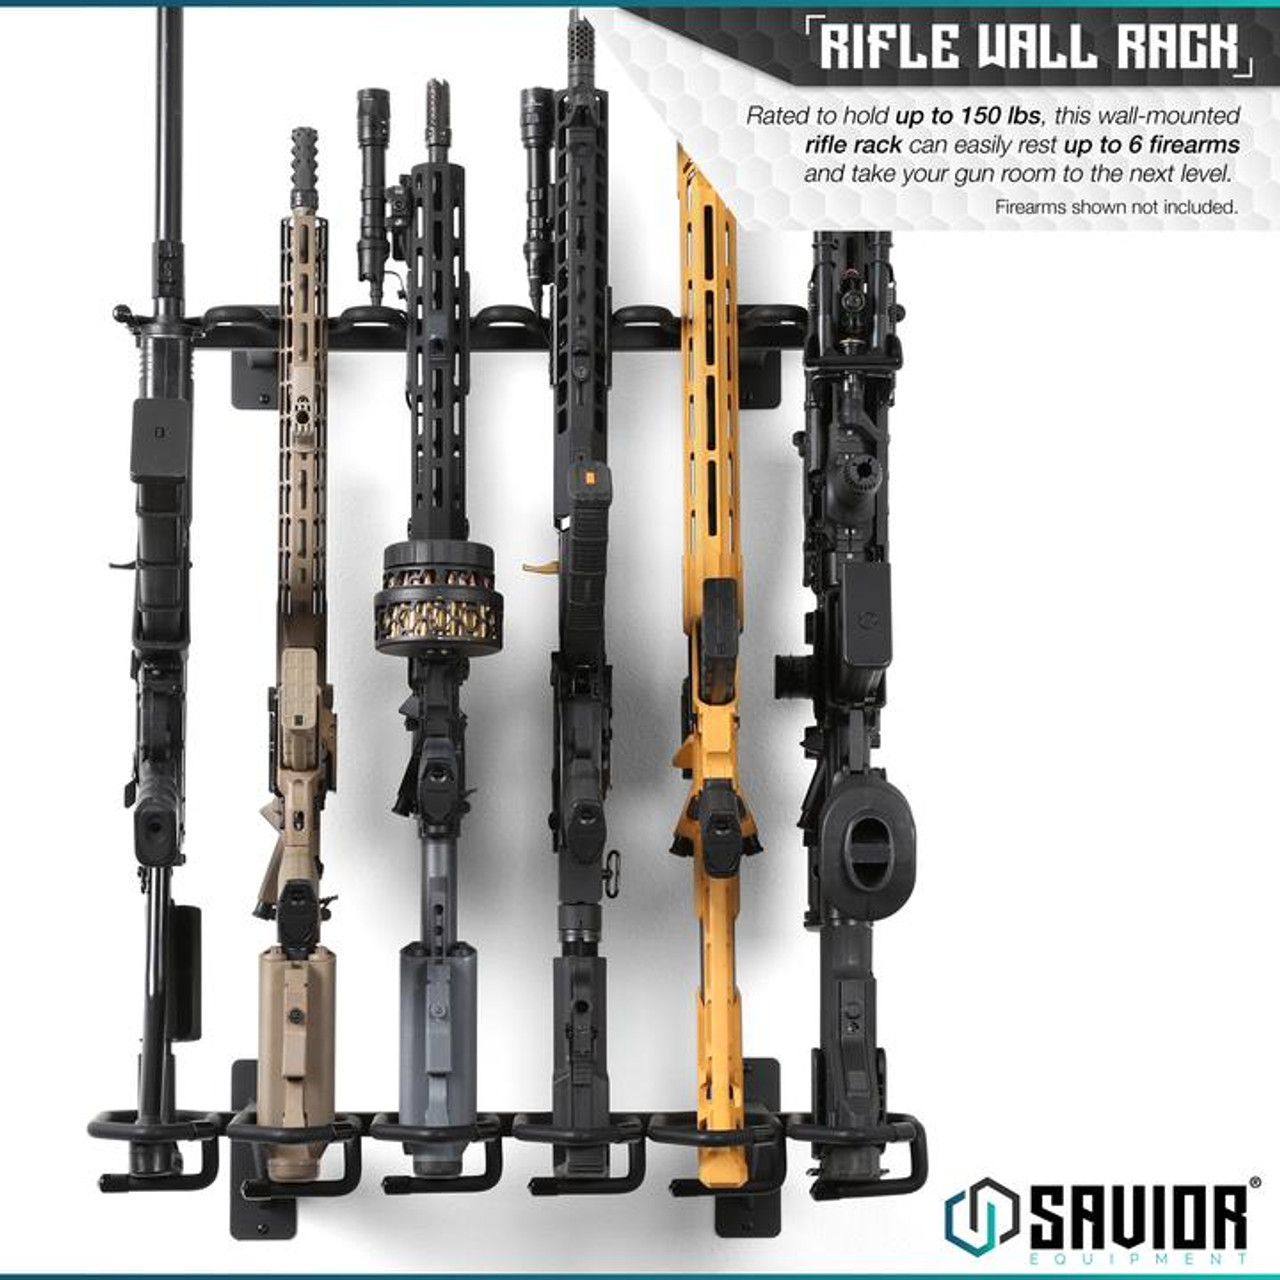 Rifle Wall Rack